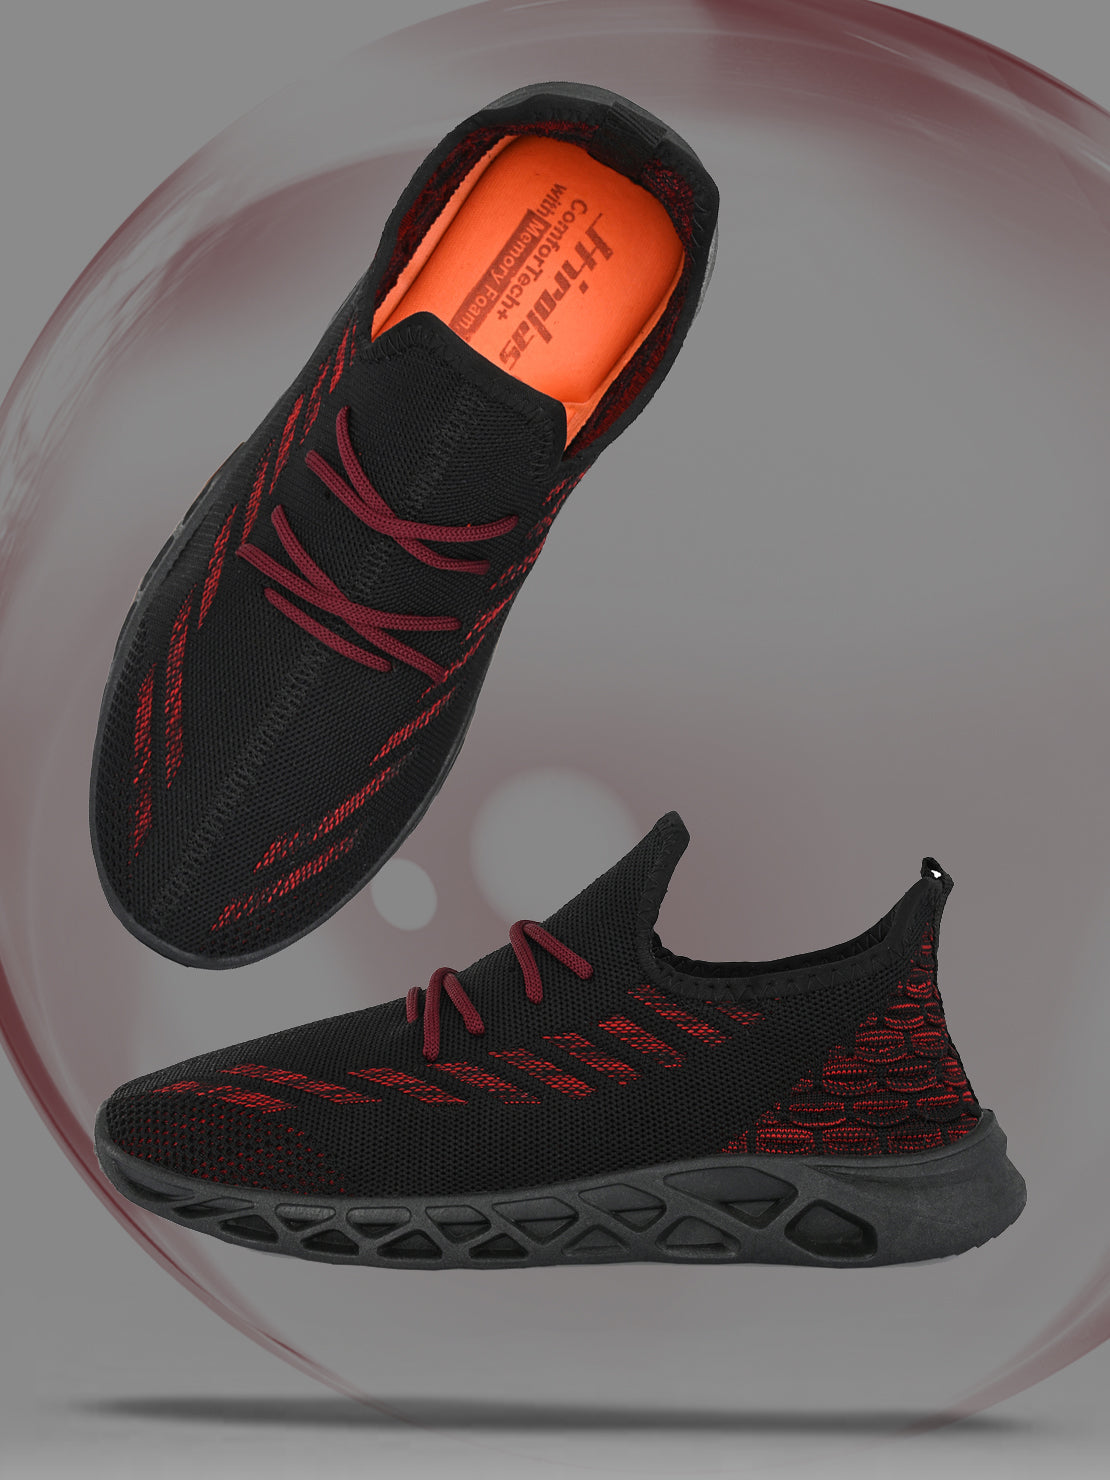 Hirolas® Men's Black Knitted Running/Walking/Gym Lace Up Sneaker Sport Shoes (HRL2051BLK)